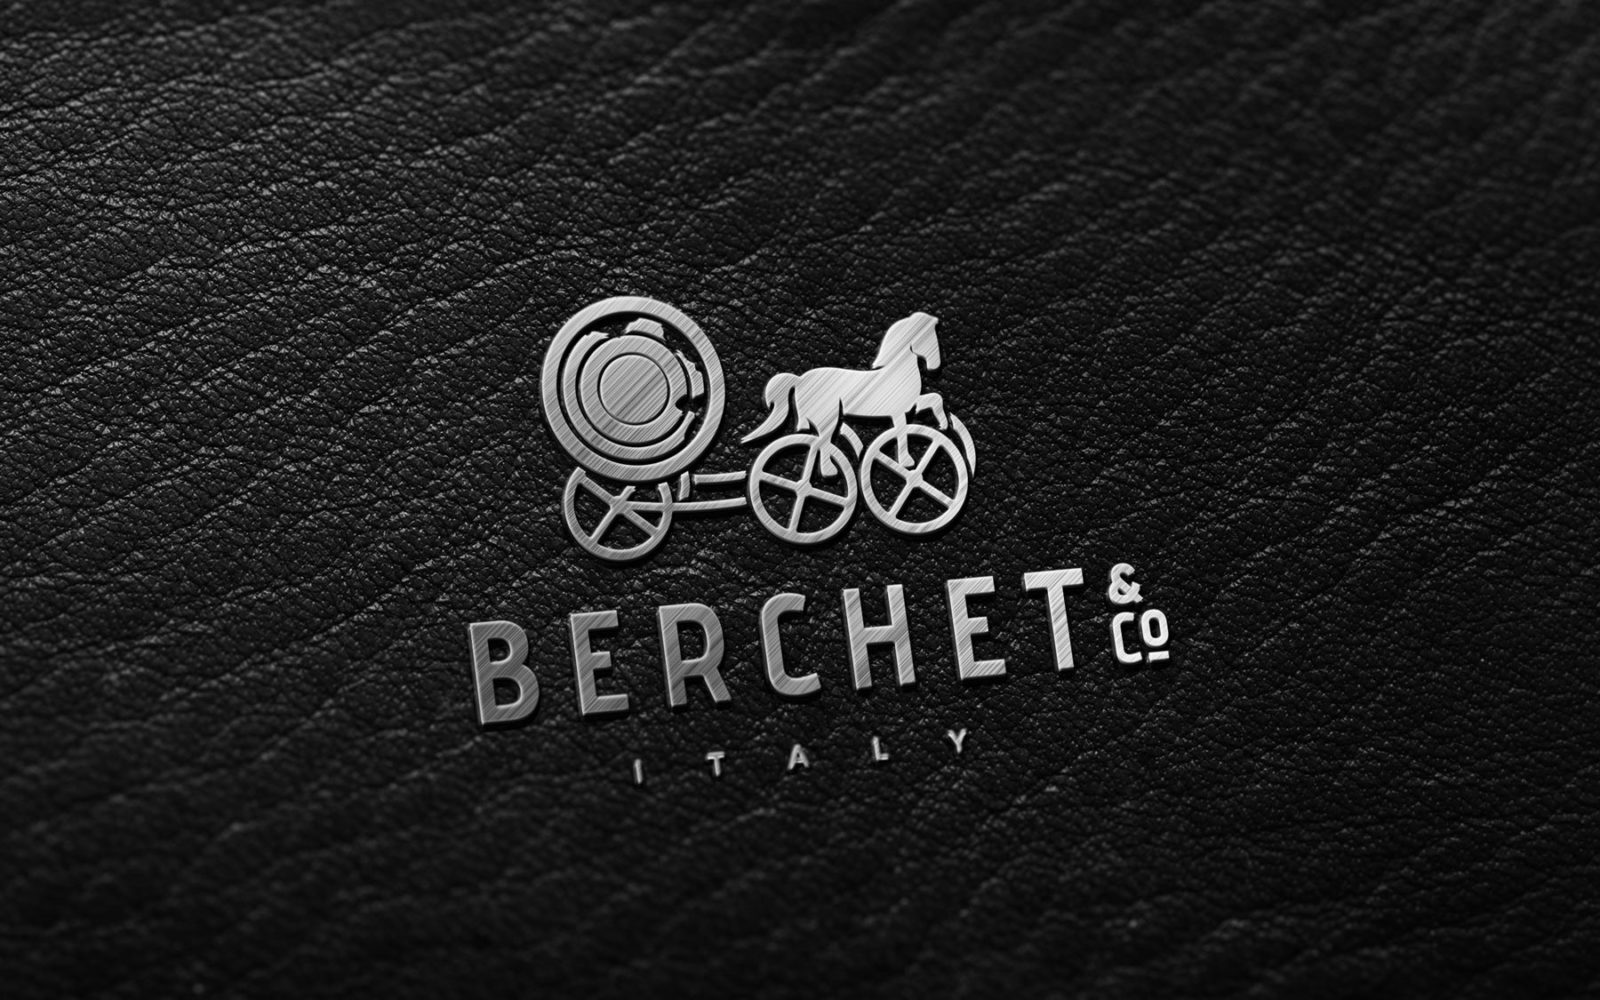 Berchet & Co brand identity